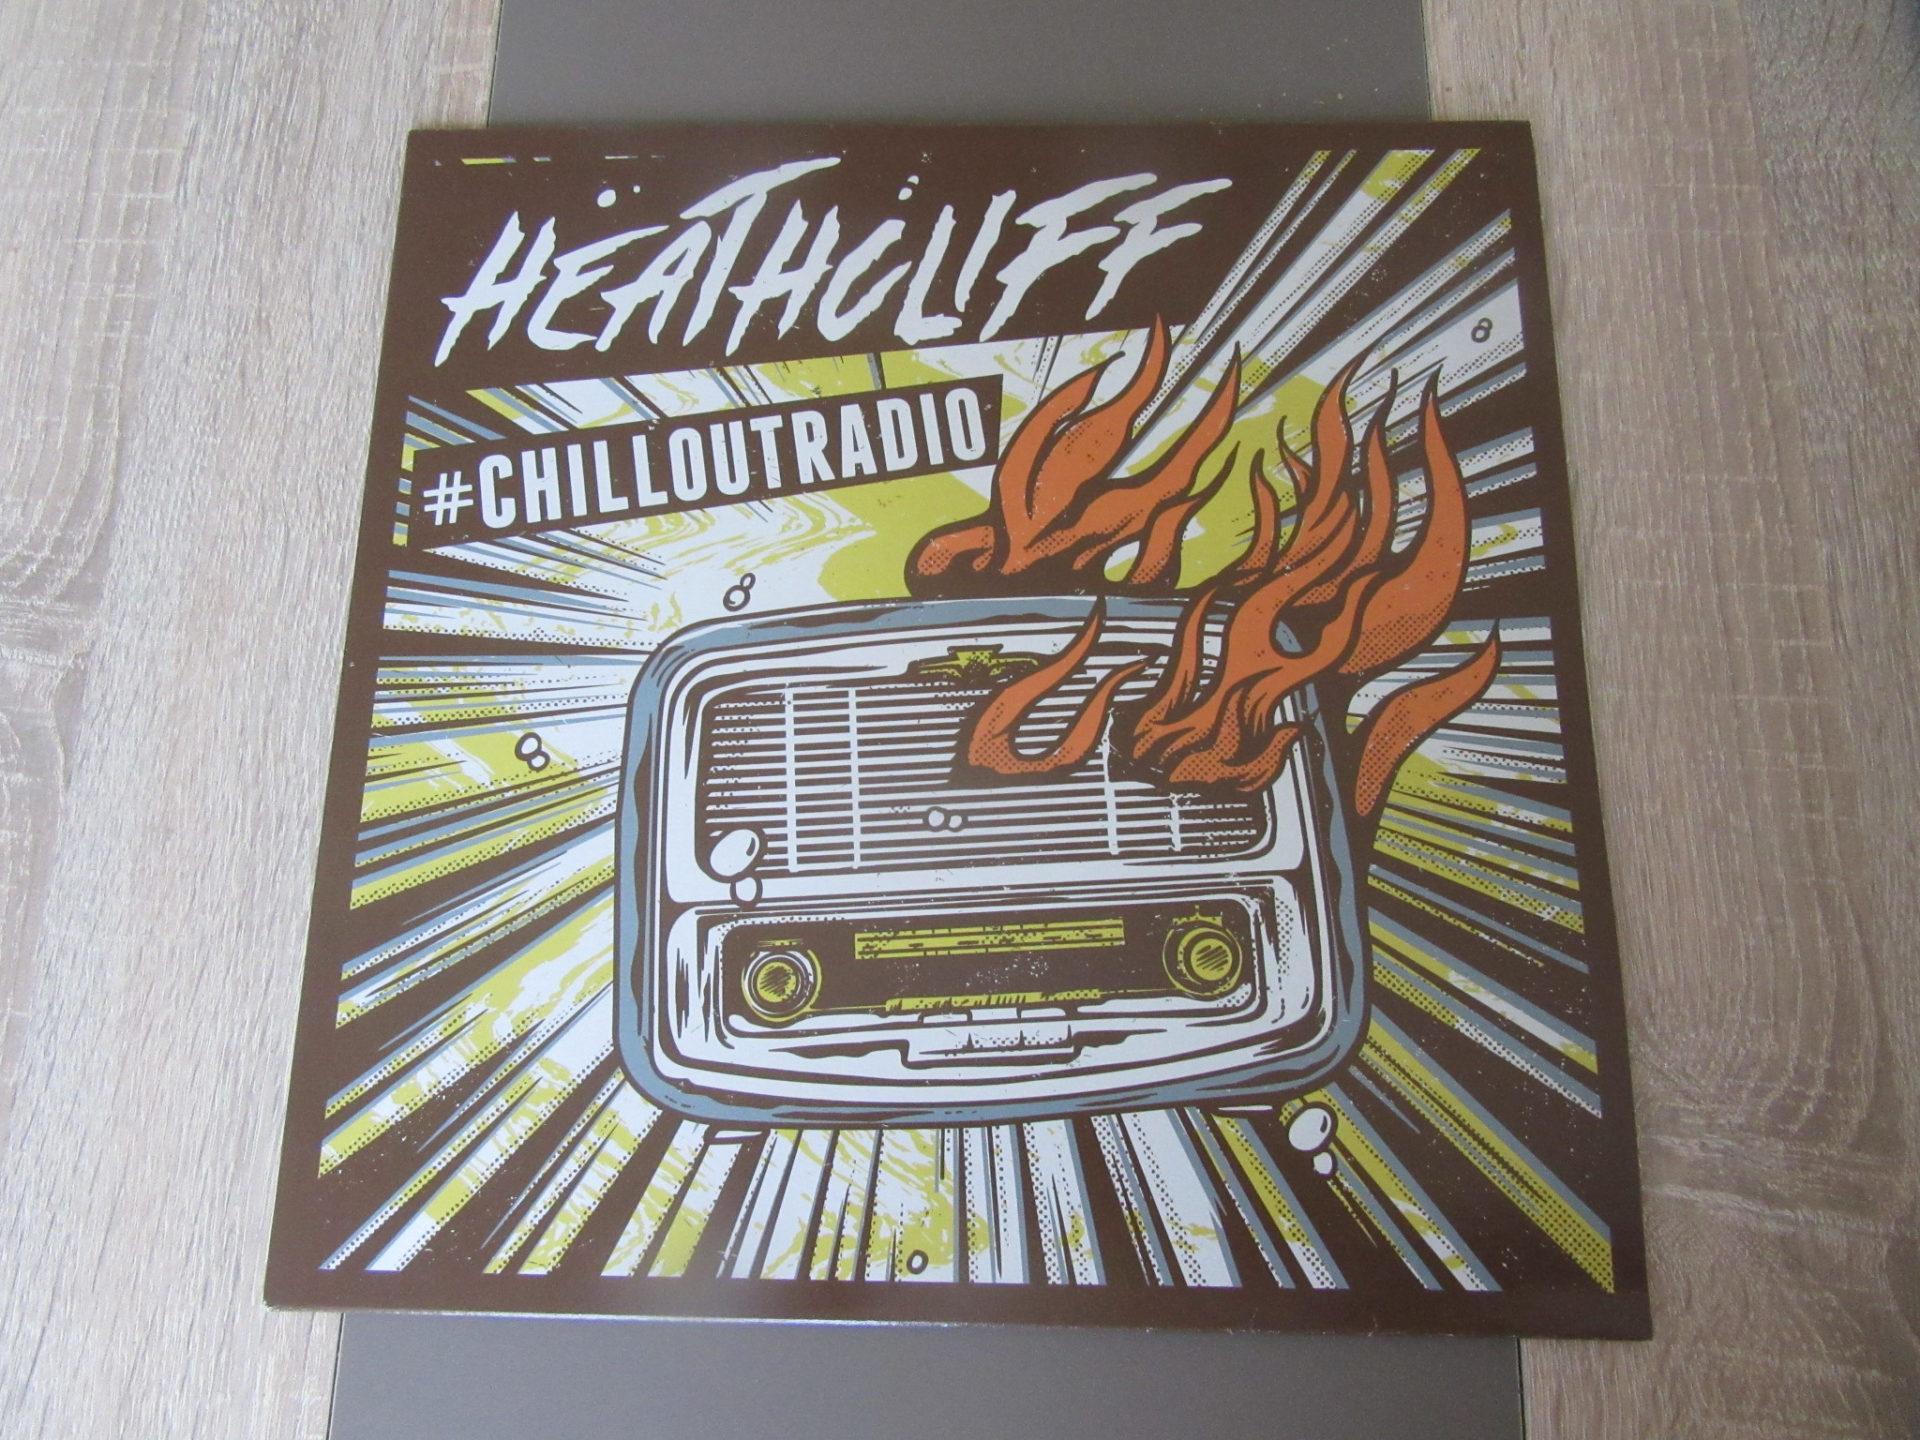 Heathcliff - "Chillout Radio" col. Vinyl-LP 5